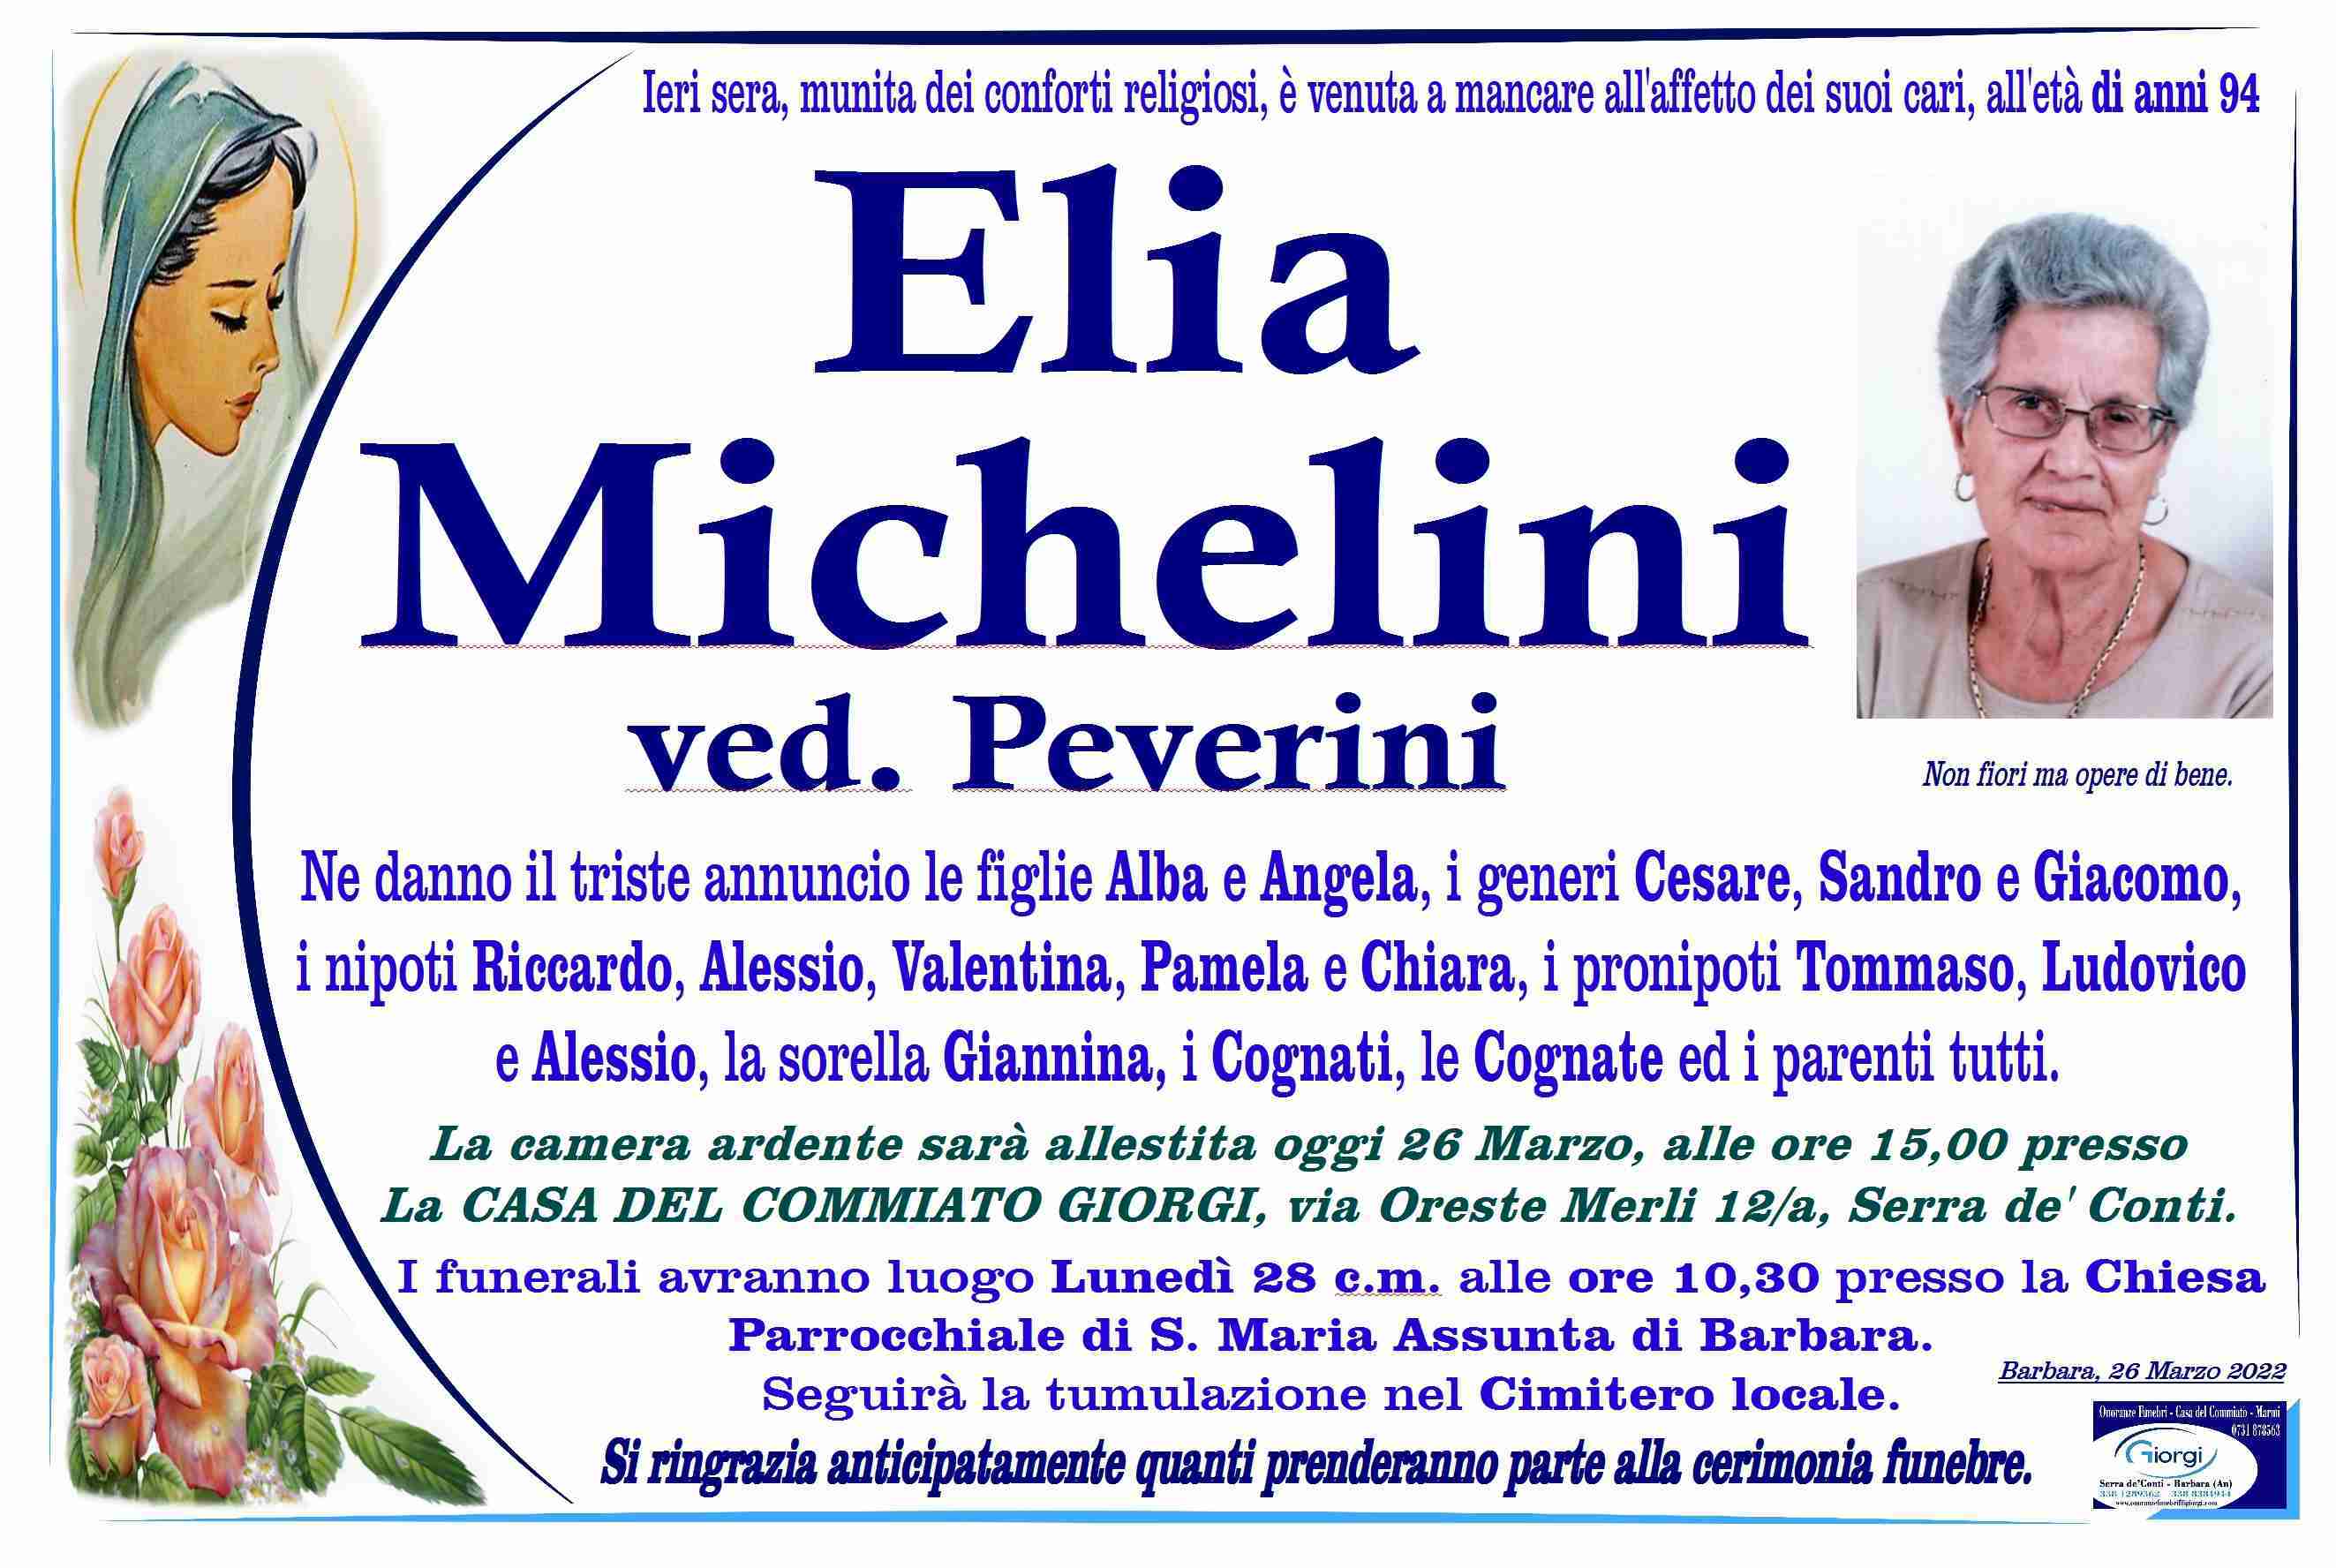 Elia Michelini